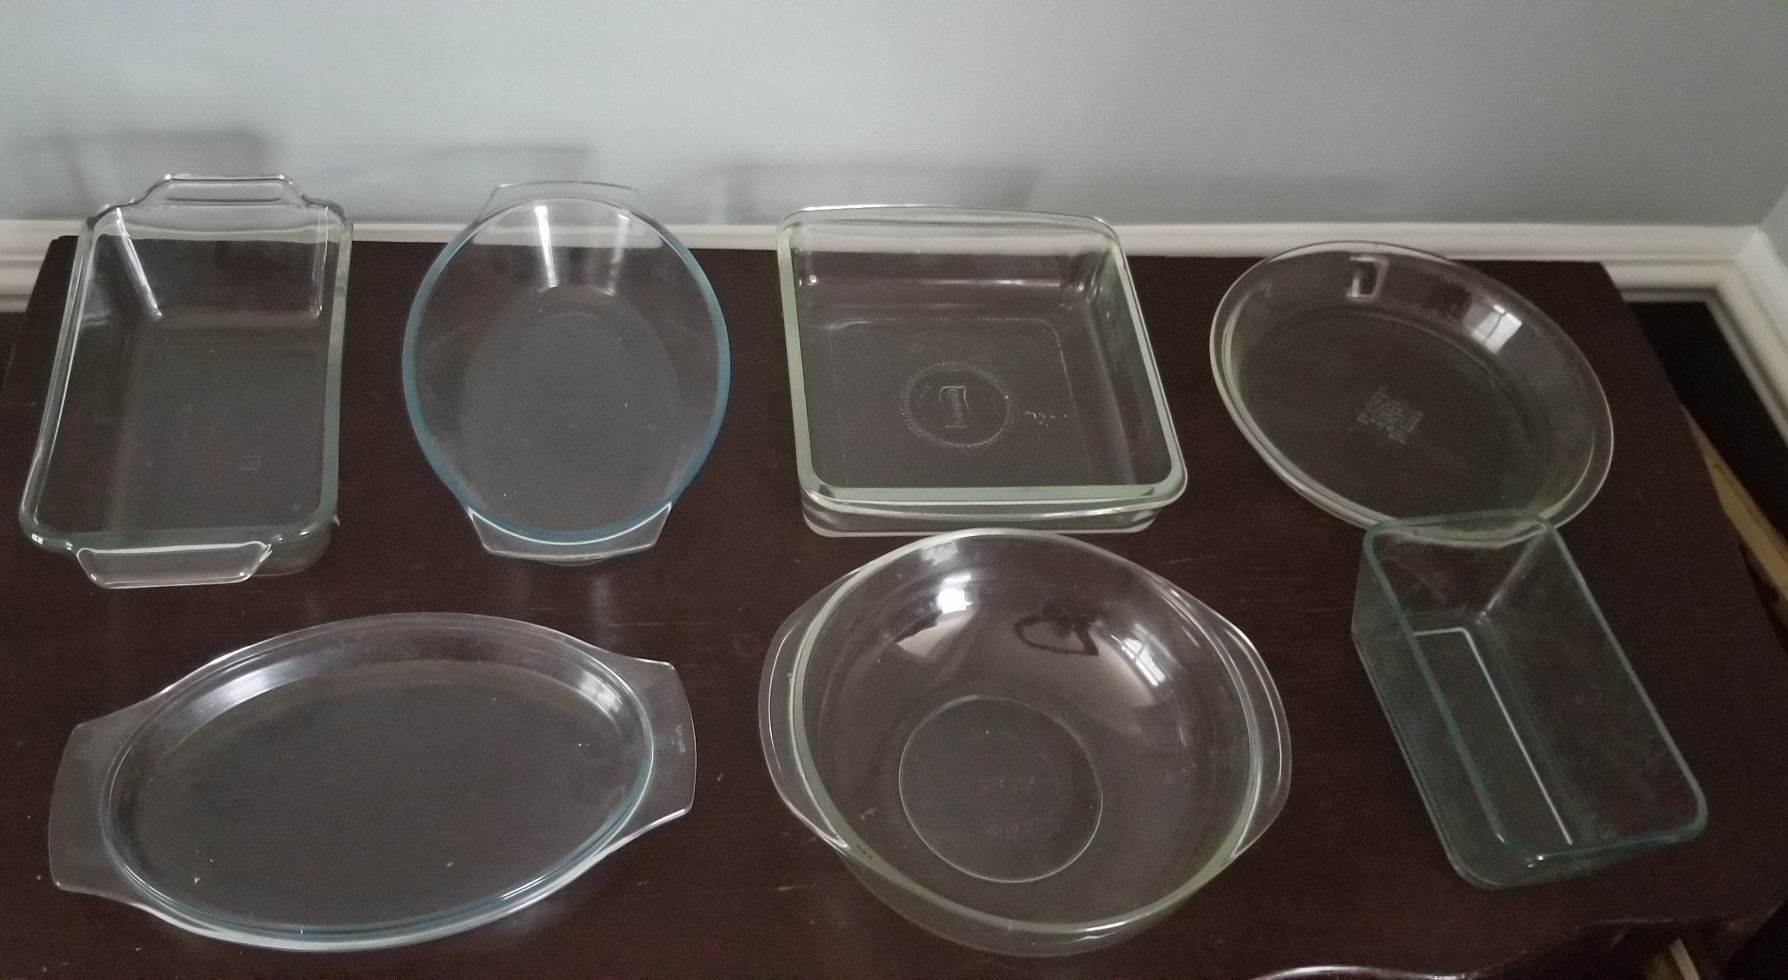 7 Pieces Glass Bake wares